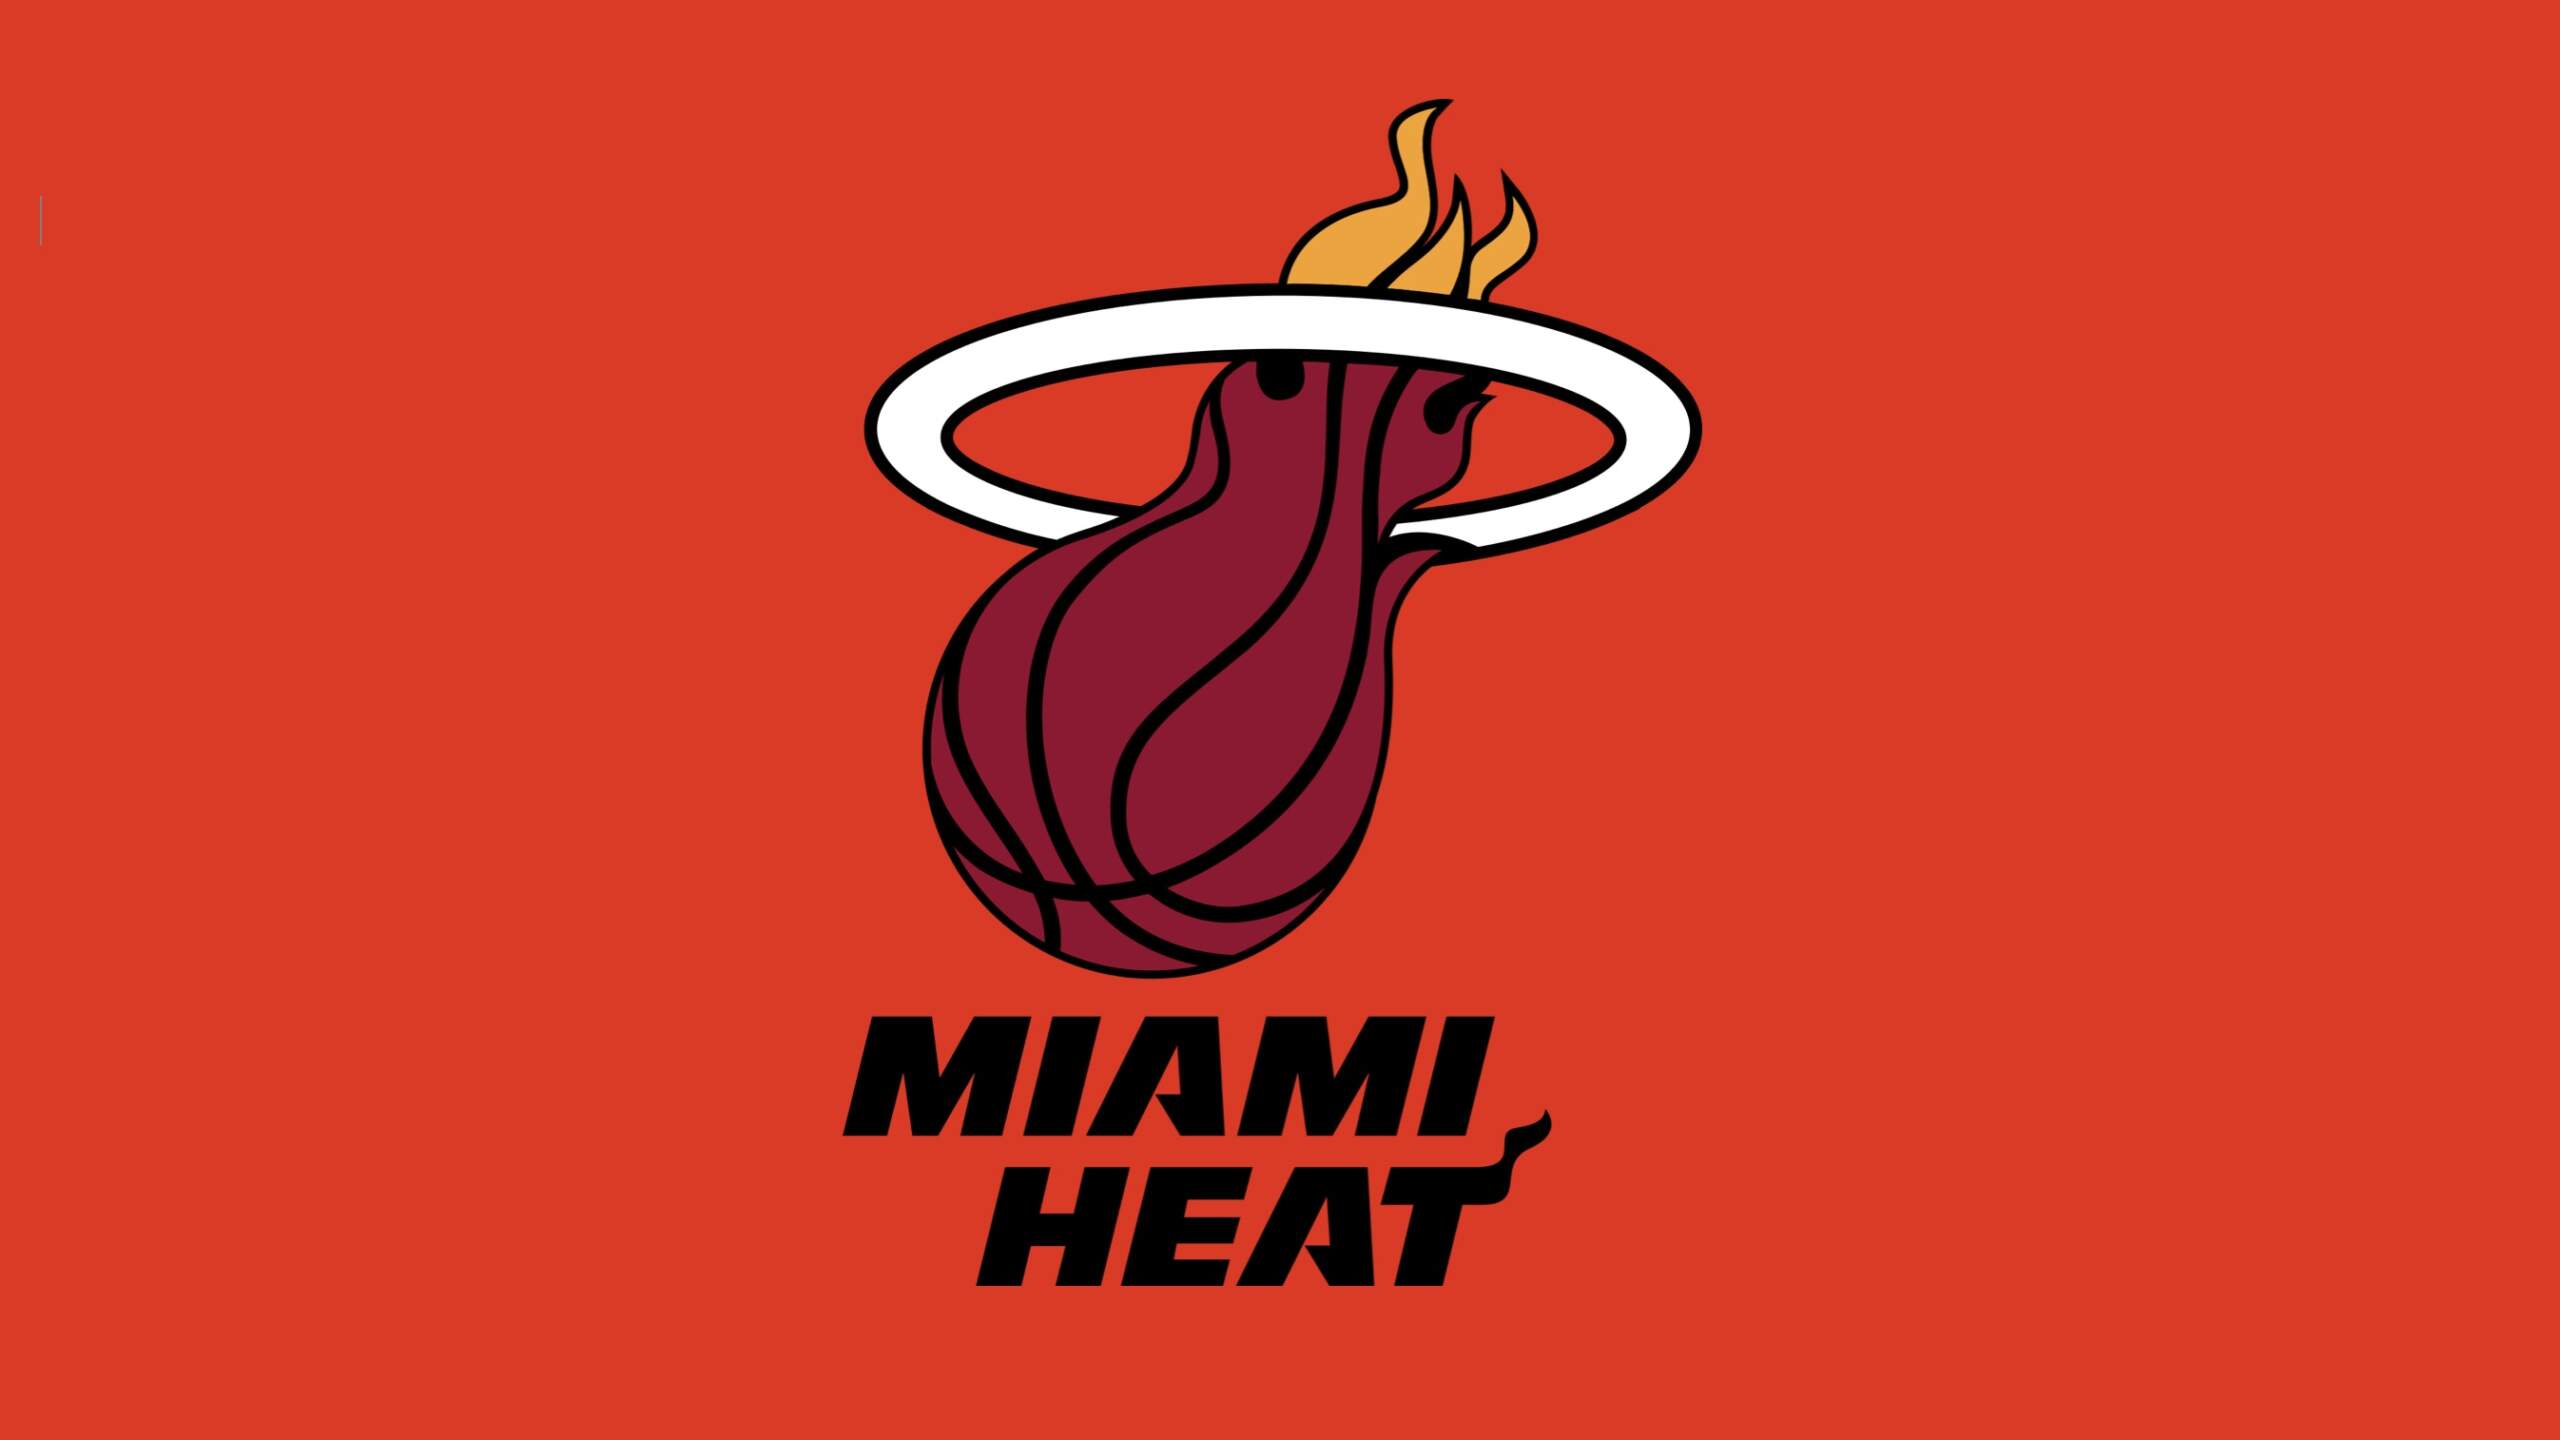 Miami Heat’s ‘Heat Culture’ City Edition Uniform Leaks